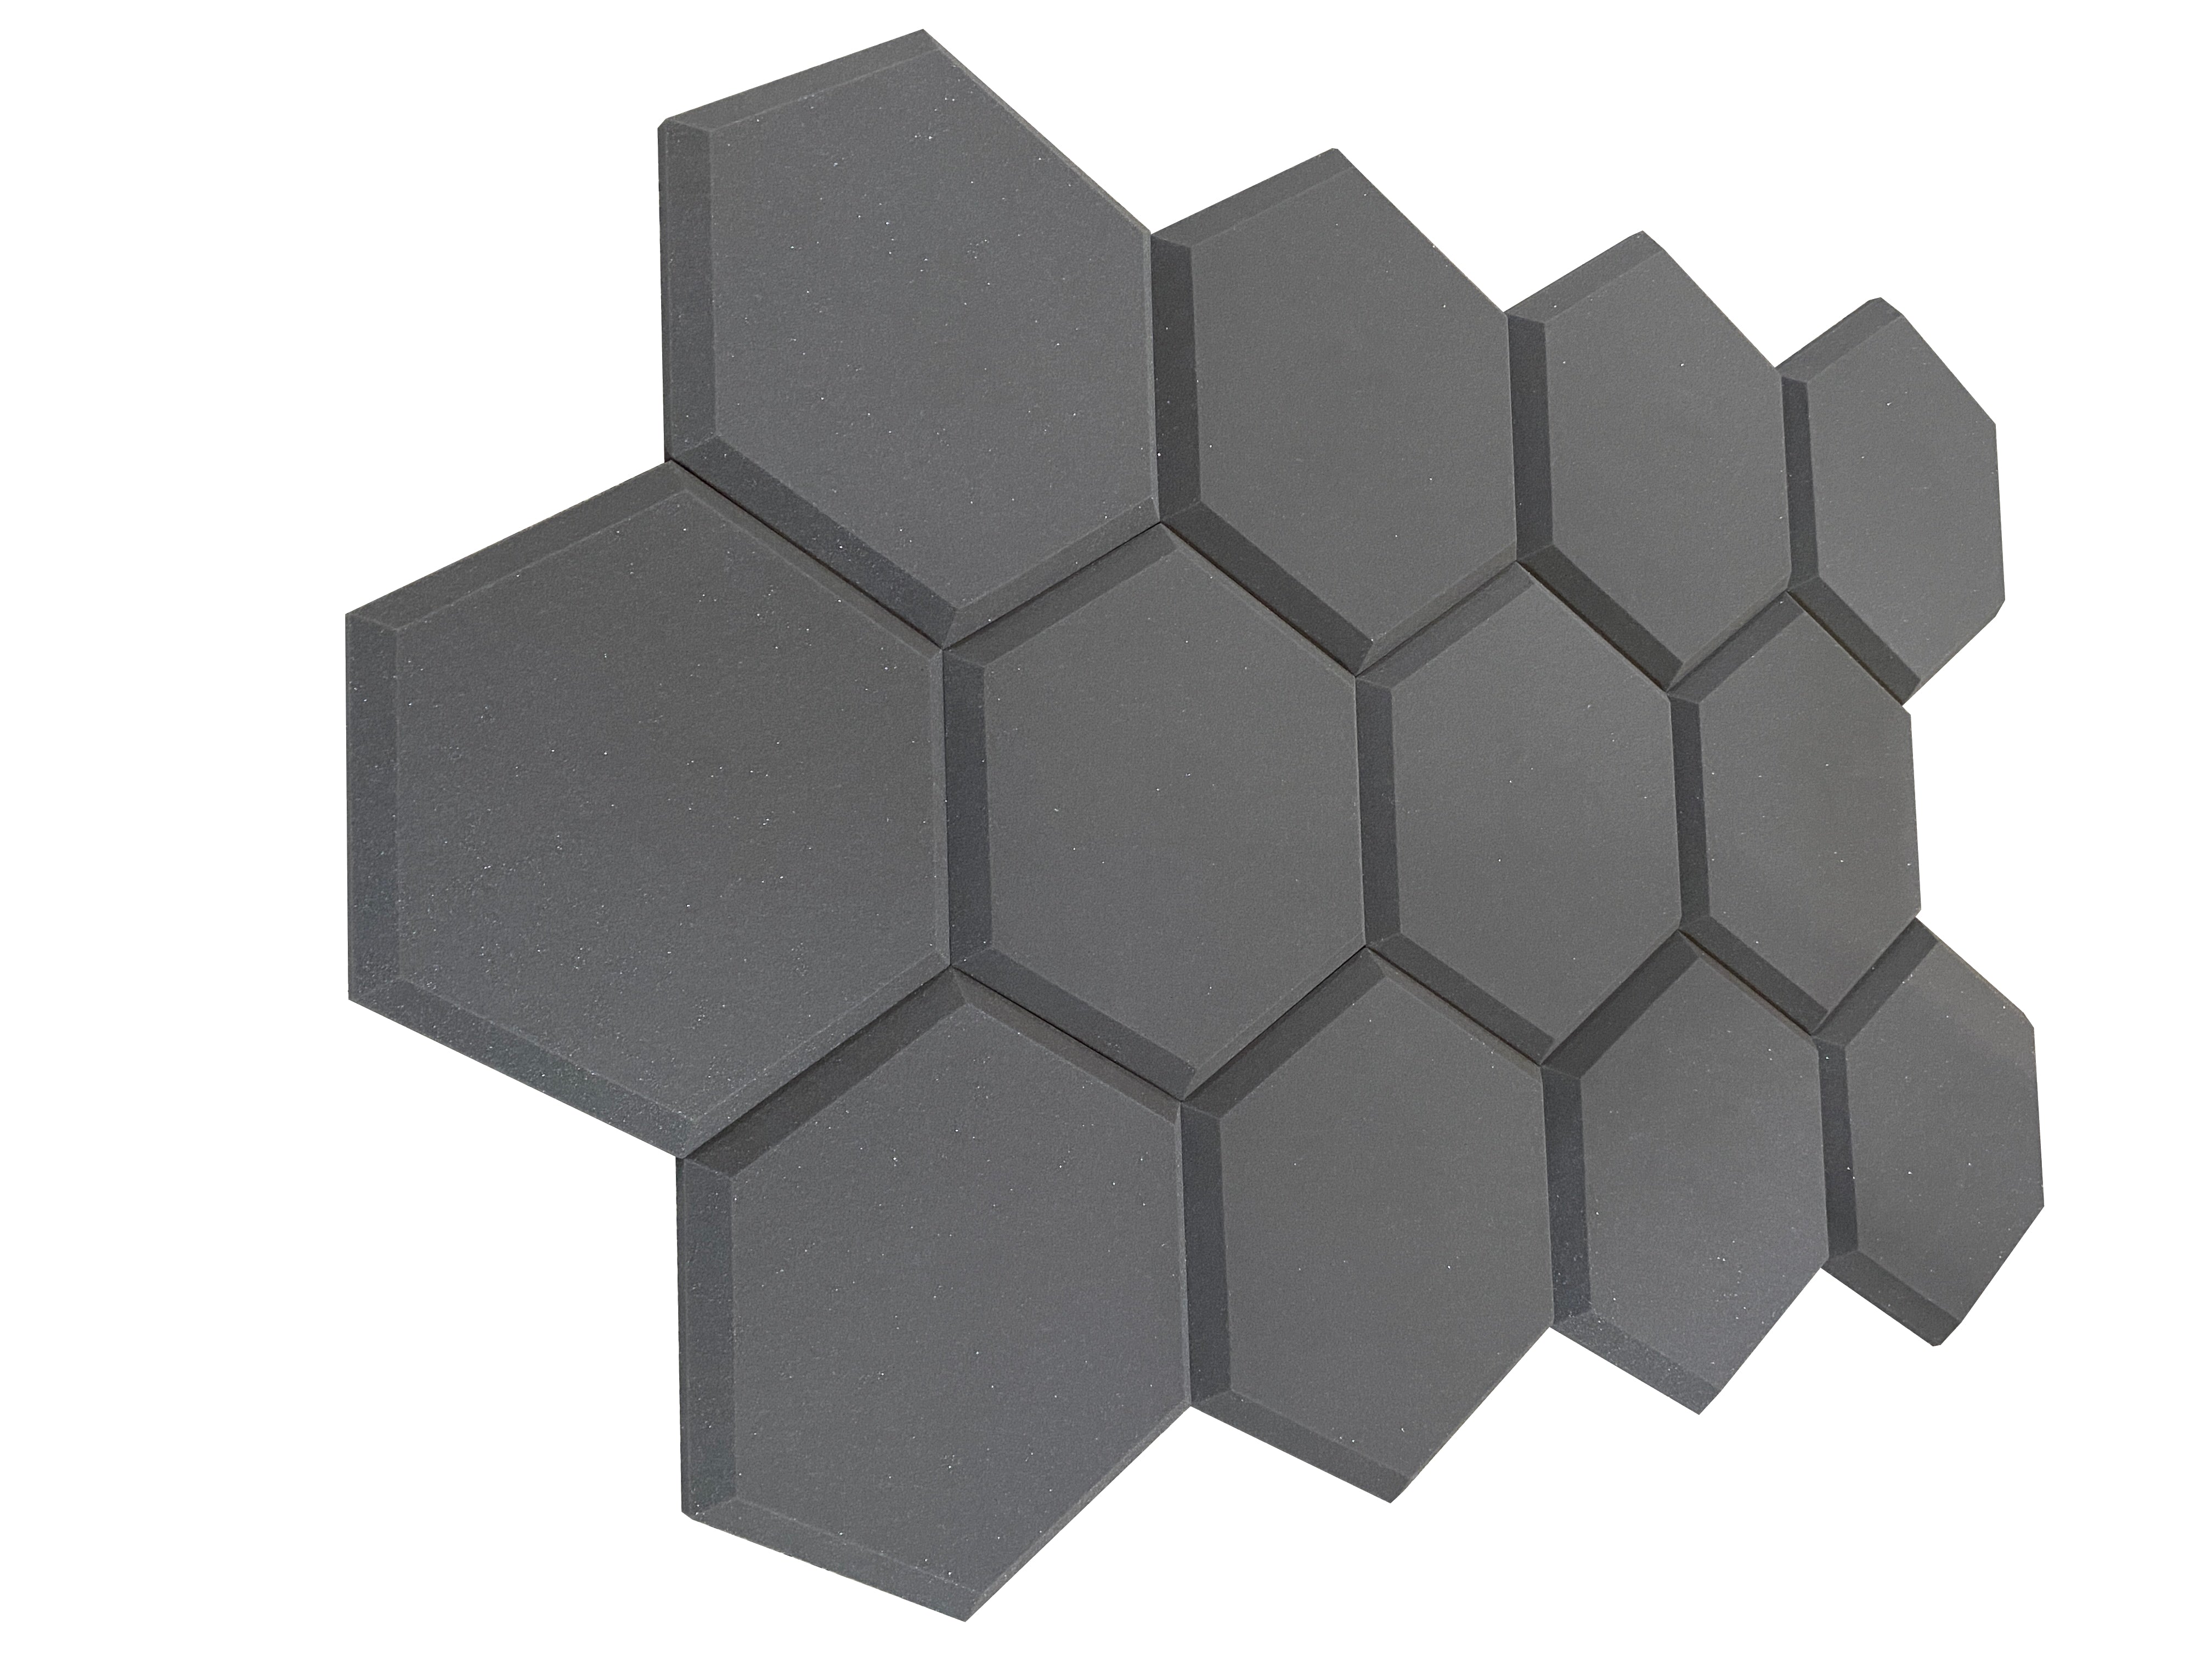 Hexatile2 Acoustic Studio Foam Tile Pack